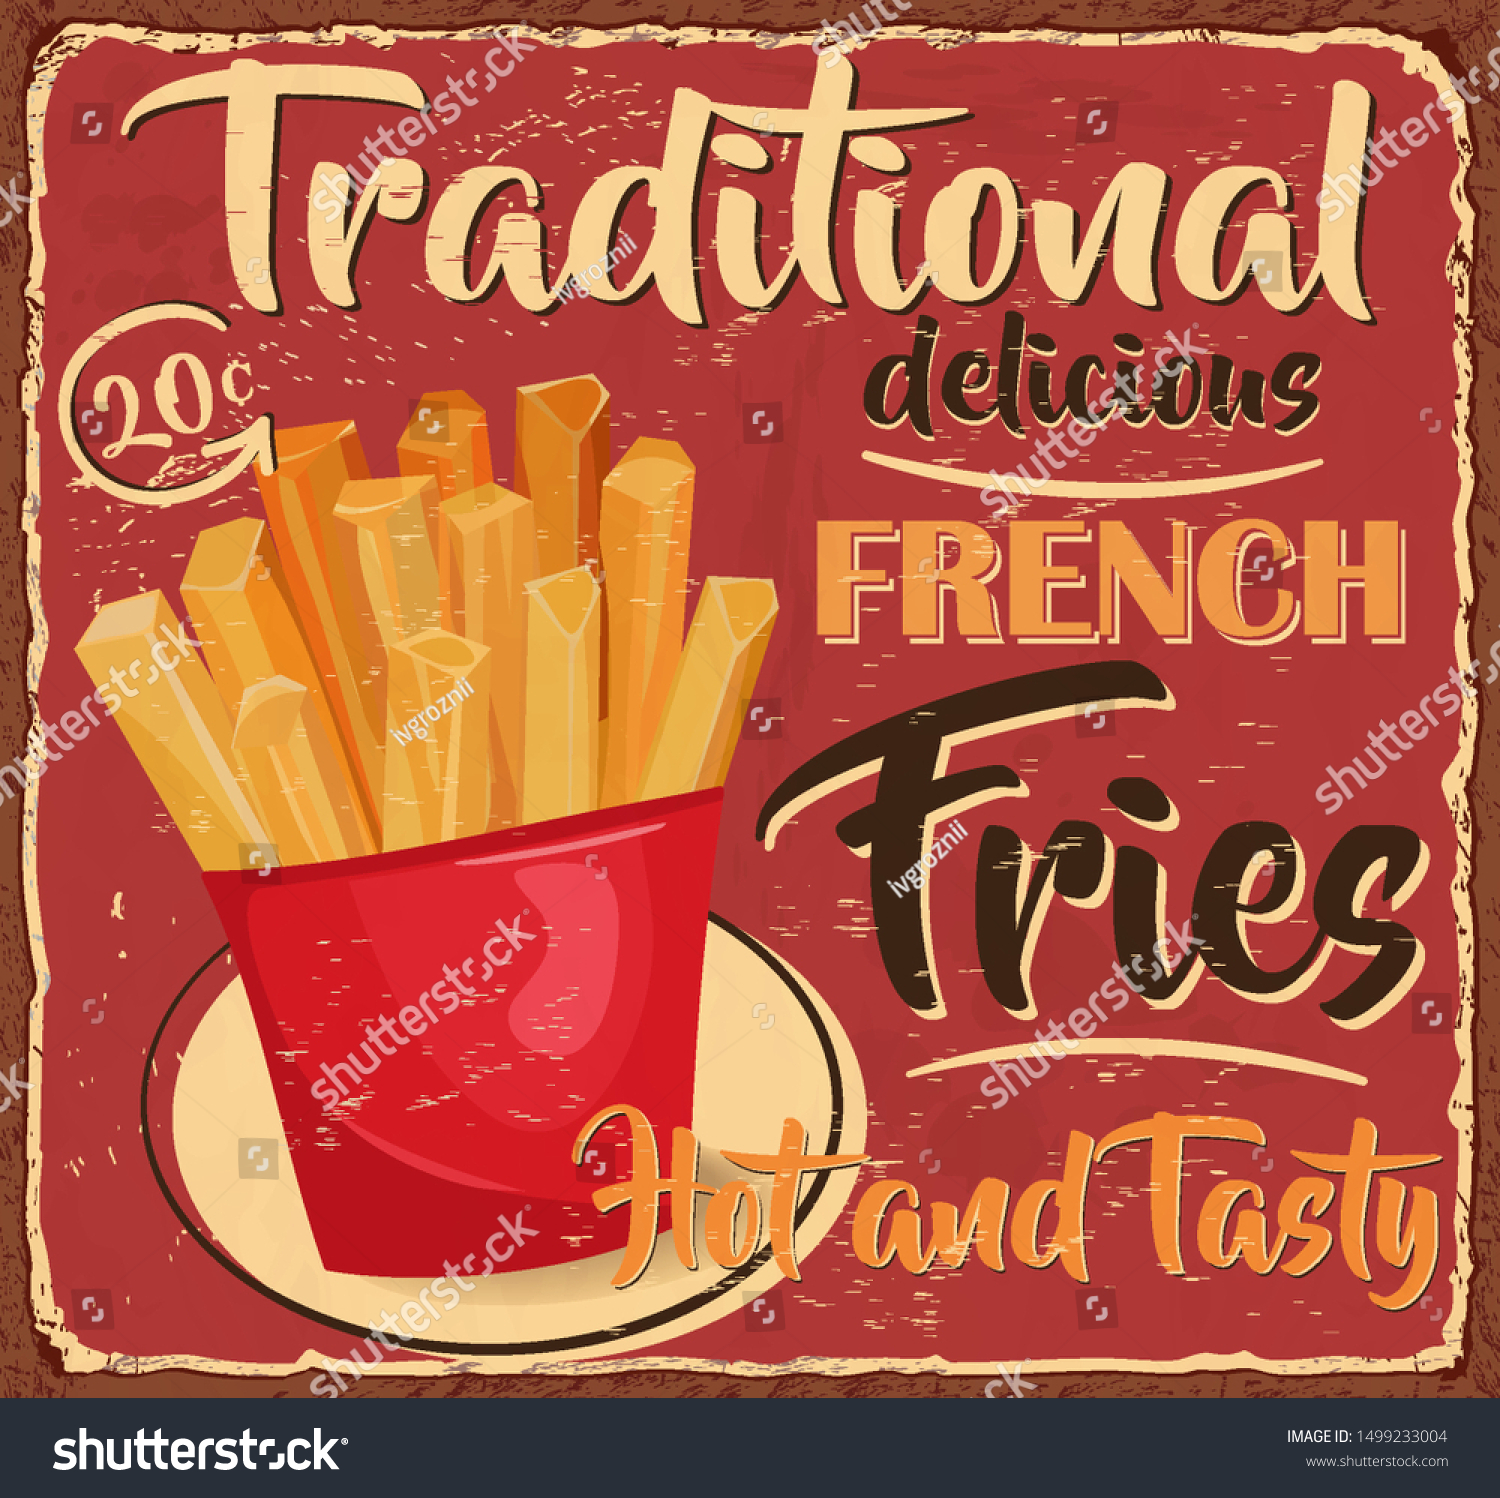 Fresh Cut French Fries metal sign 410mm x 300mm rh 